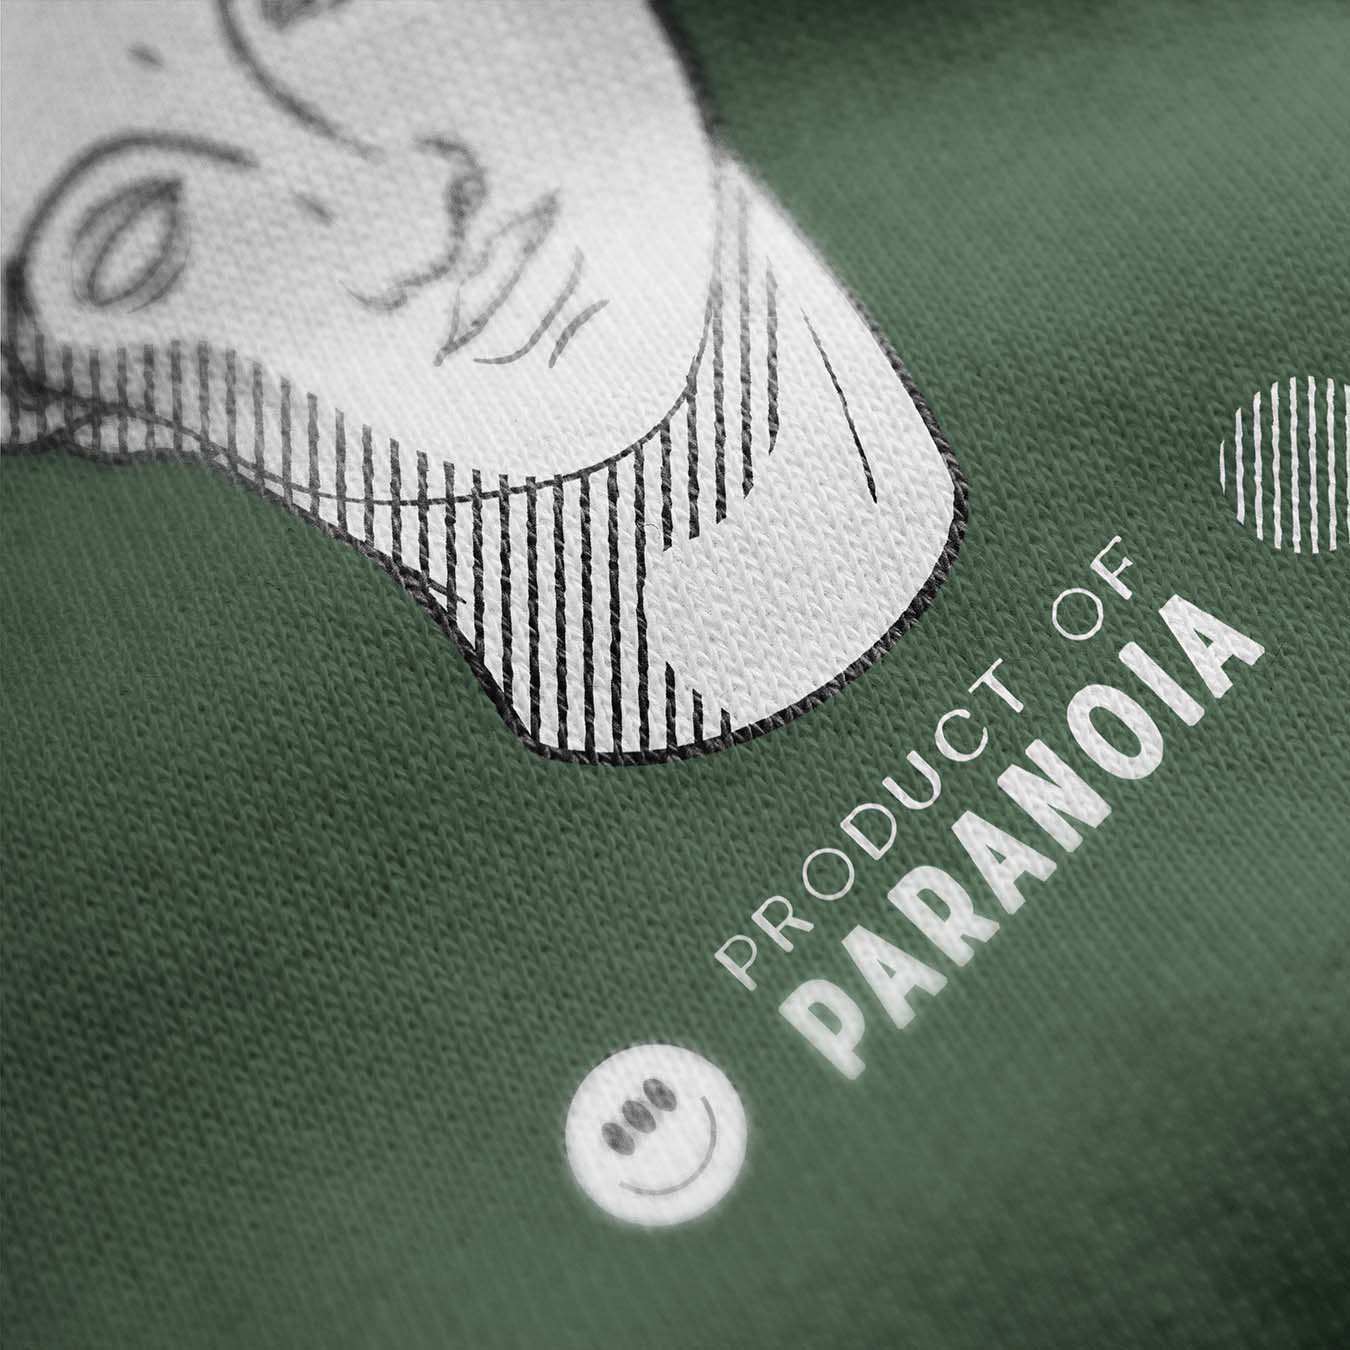 Product of Paranoia Printed Sweatshirt - keos.life